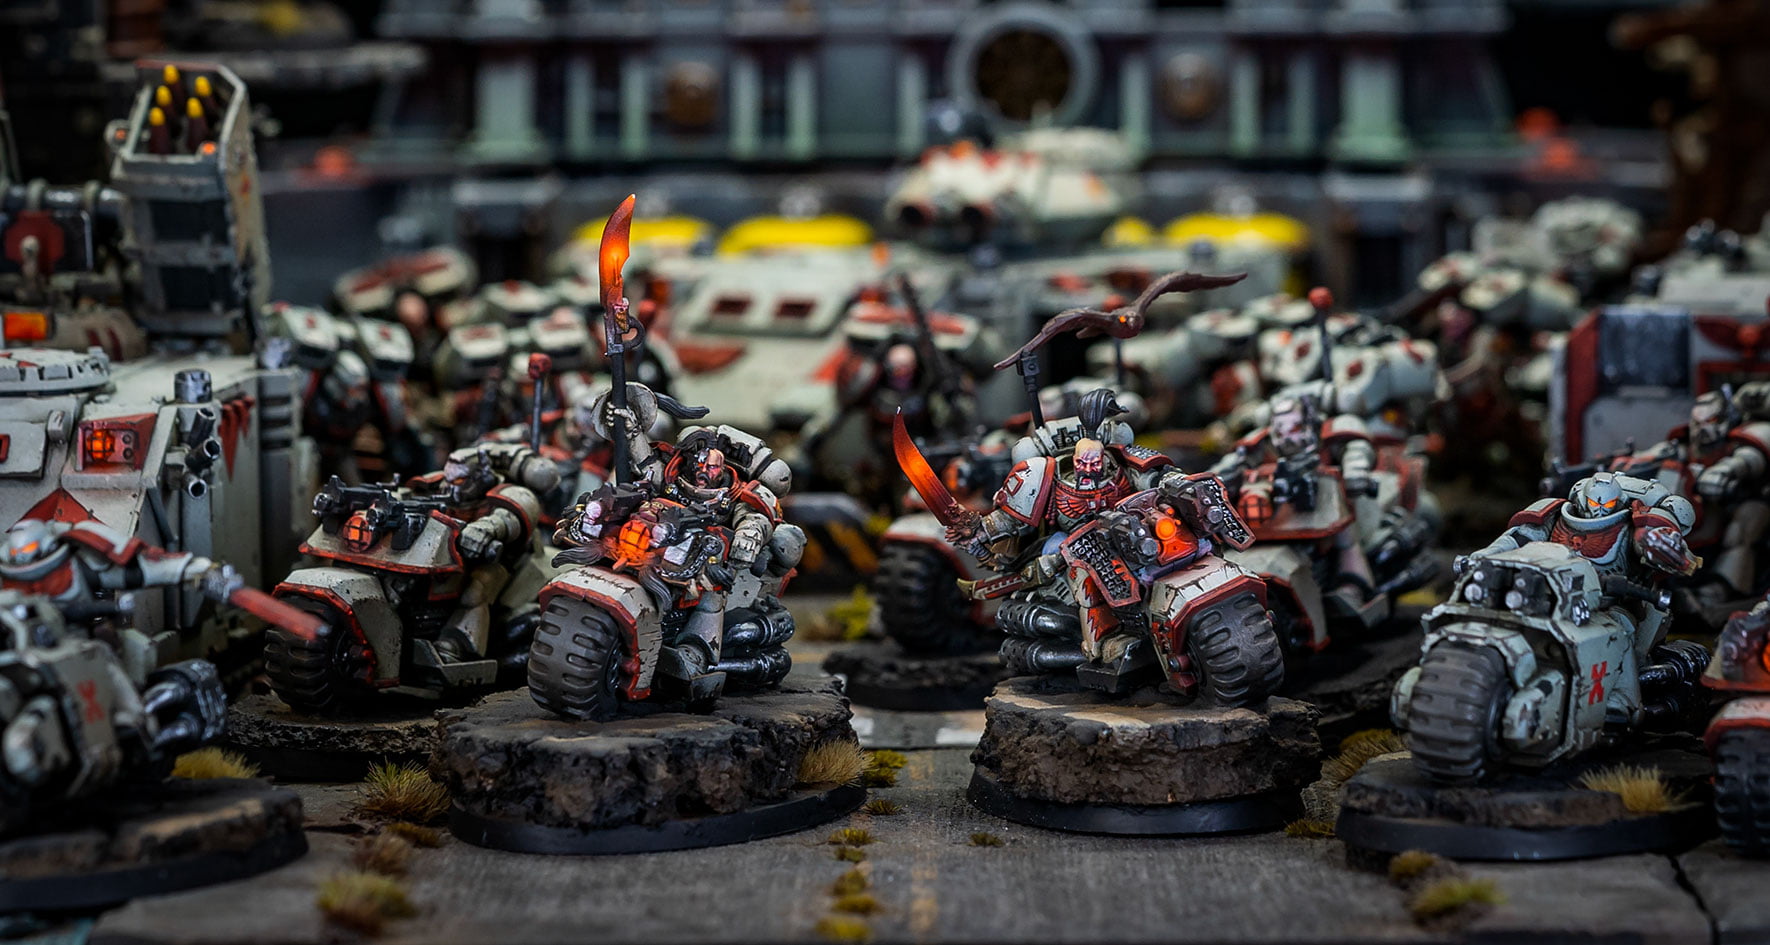 Miniaturas pintadas del Ejército Cicatrices Blancas